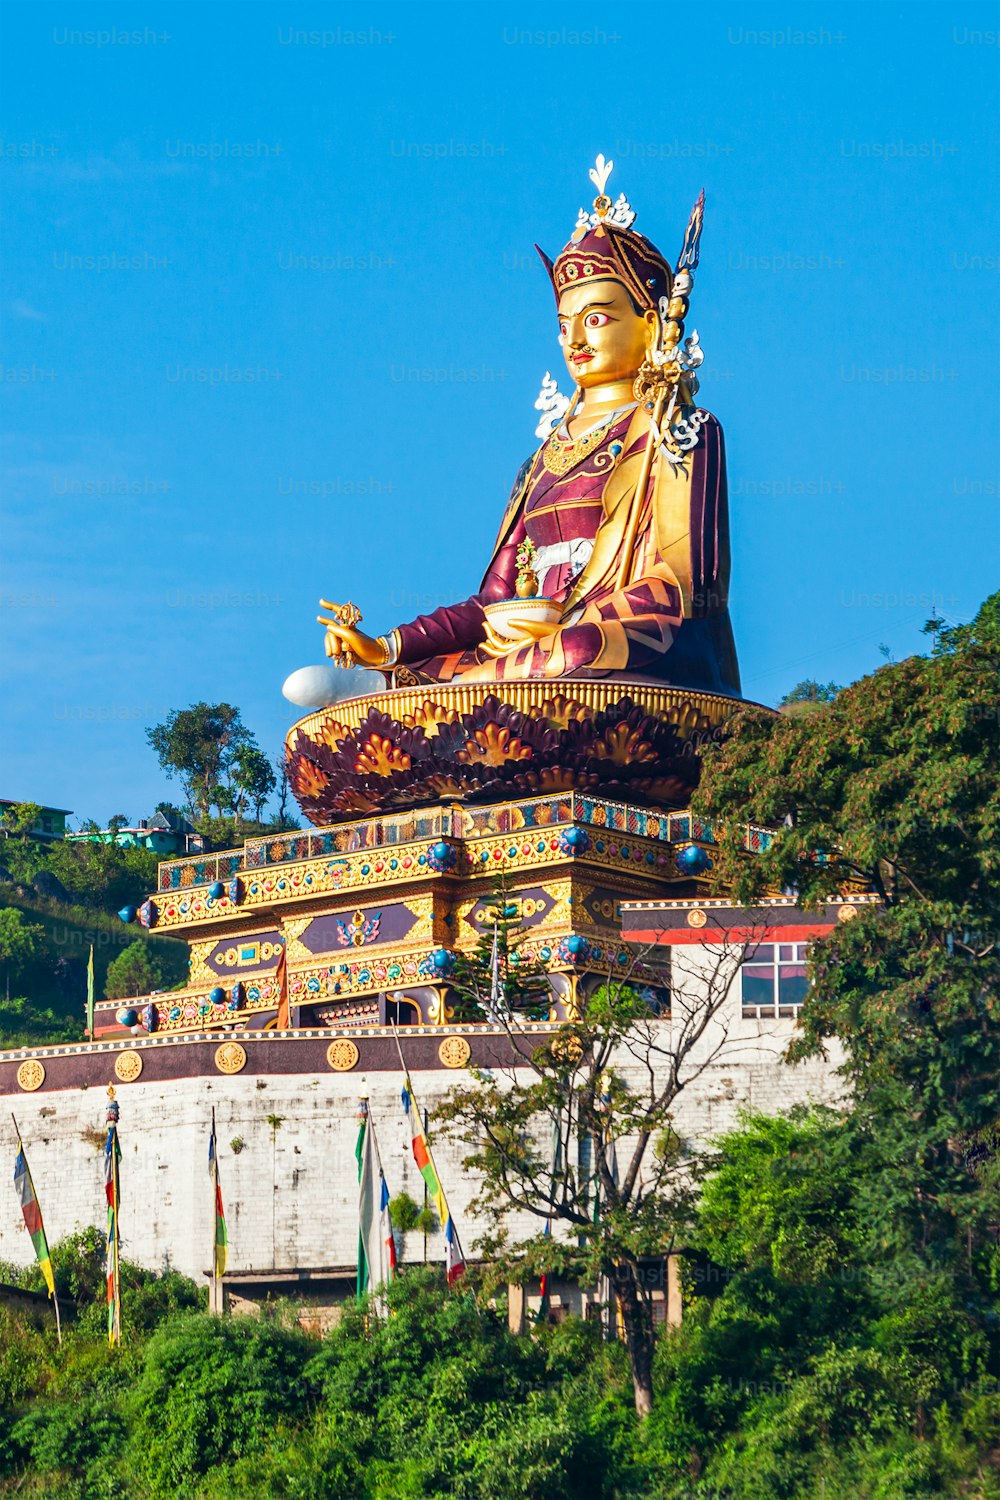 Guru Padmasambhava or Guru Rinpoche statue near the Mahatma Buddha temple in Rewalsar town, Himachal Pradesh state in India